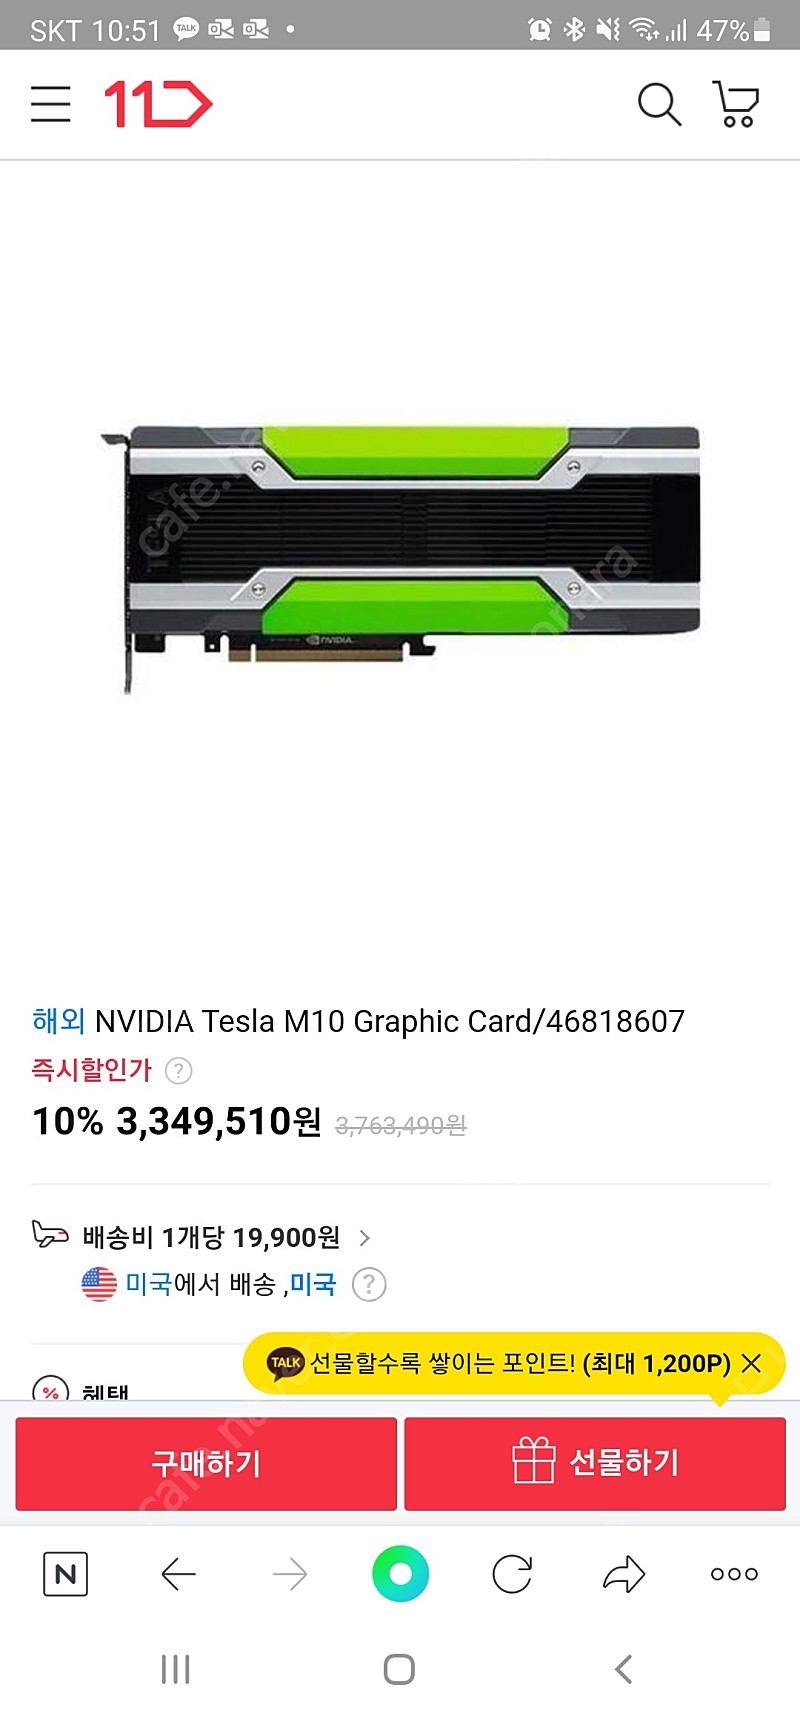 NVIDAI TESLA M10 그래픽 카드 판매합니다.